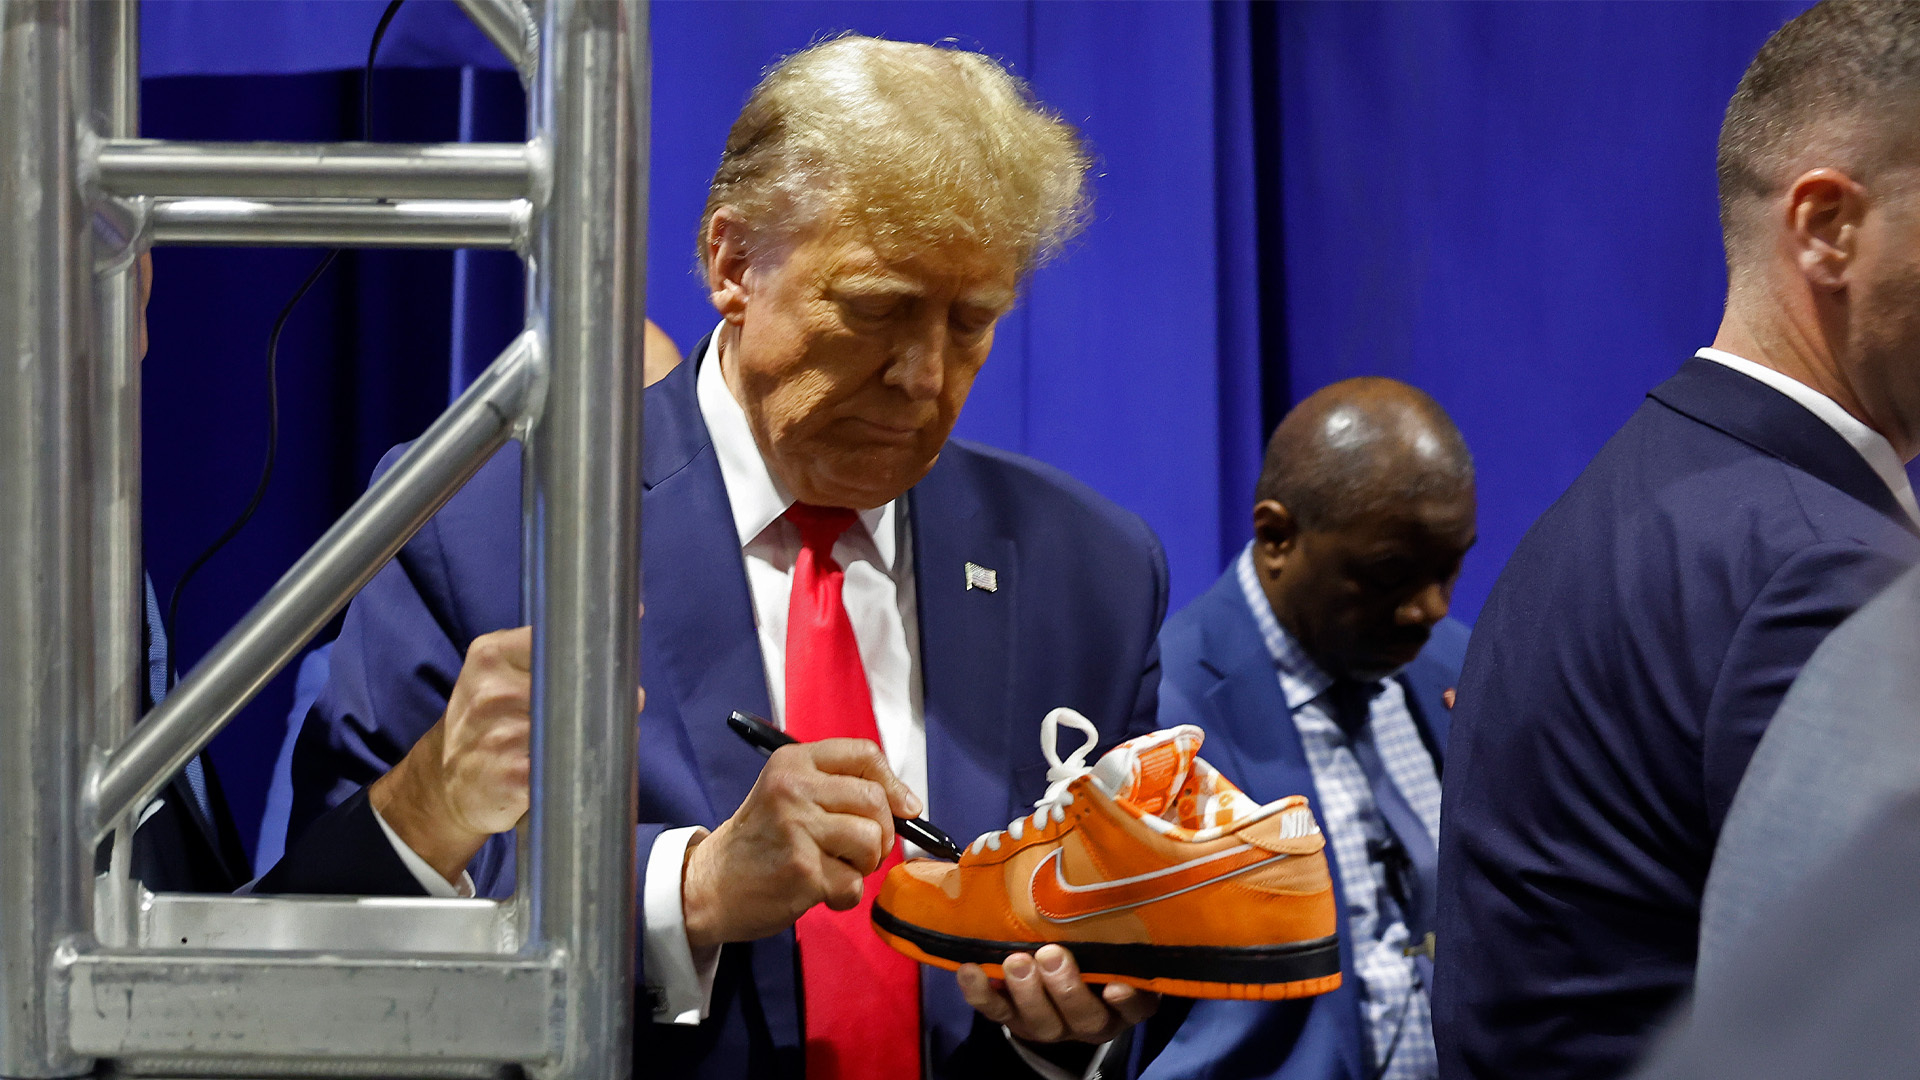 Donald Trump signing Orange Lobster Nike SB Dunks